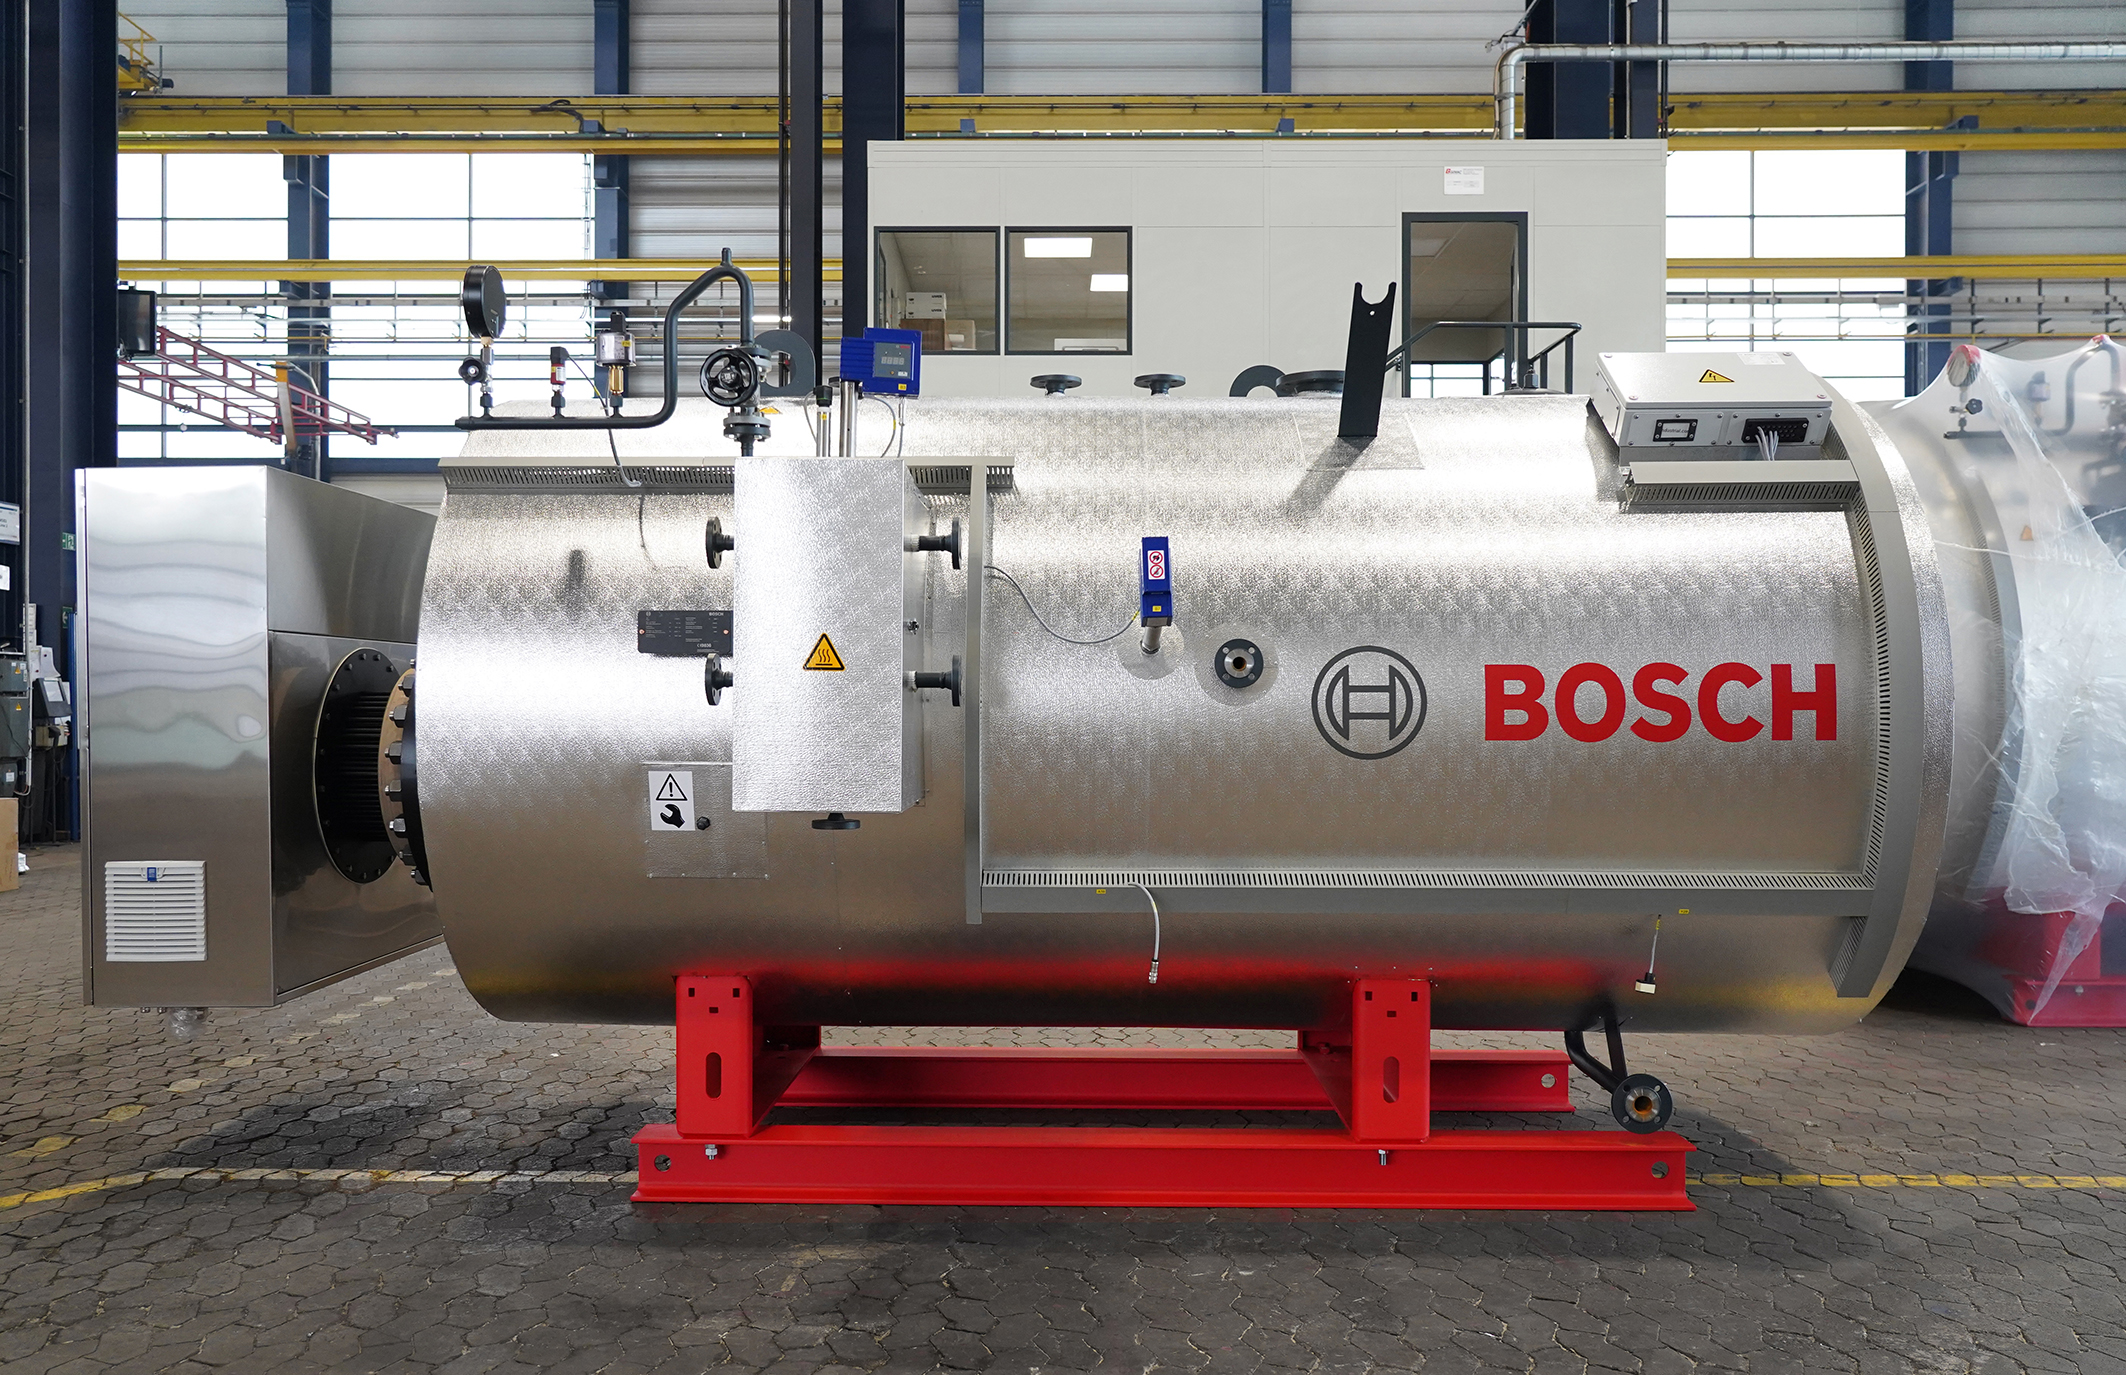 Bosch ELSB steam boilers: Generate steam 100% electrically